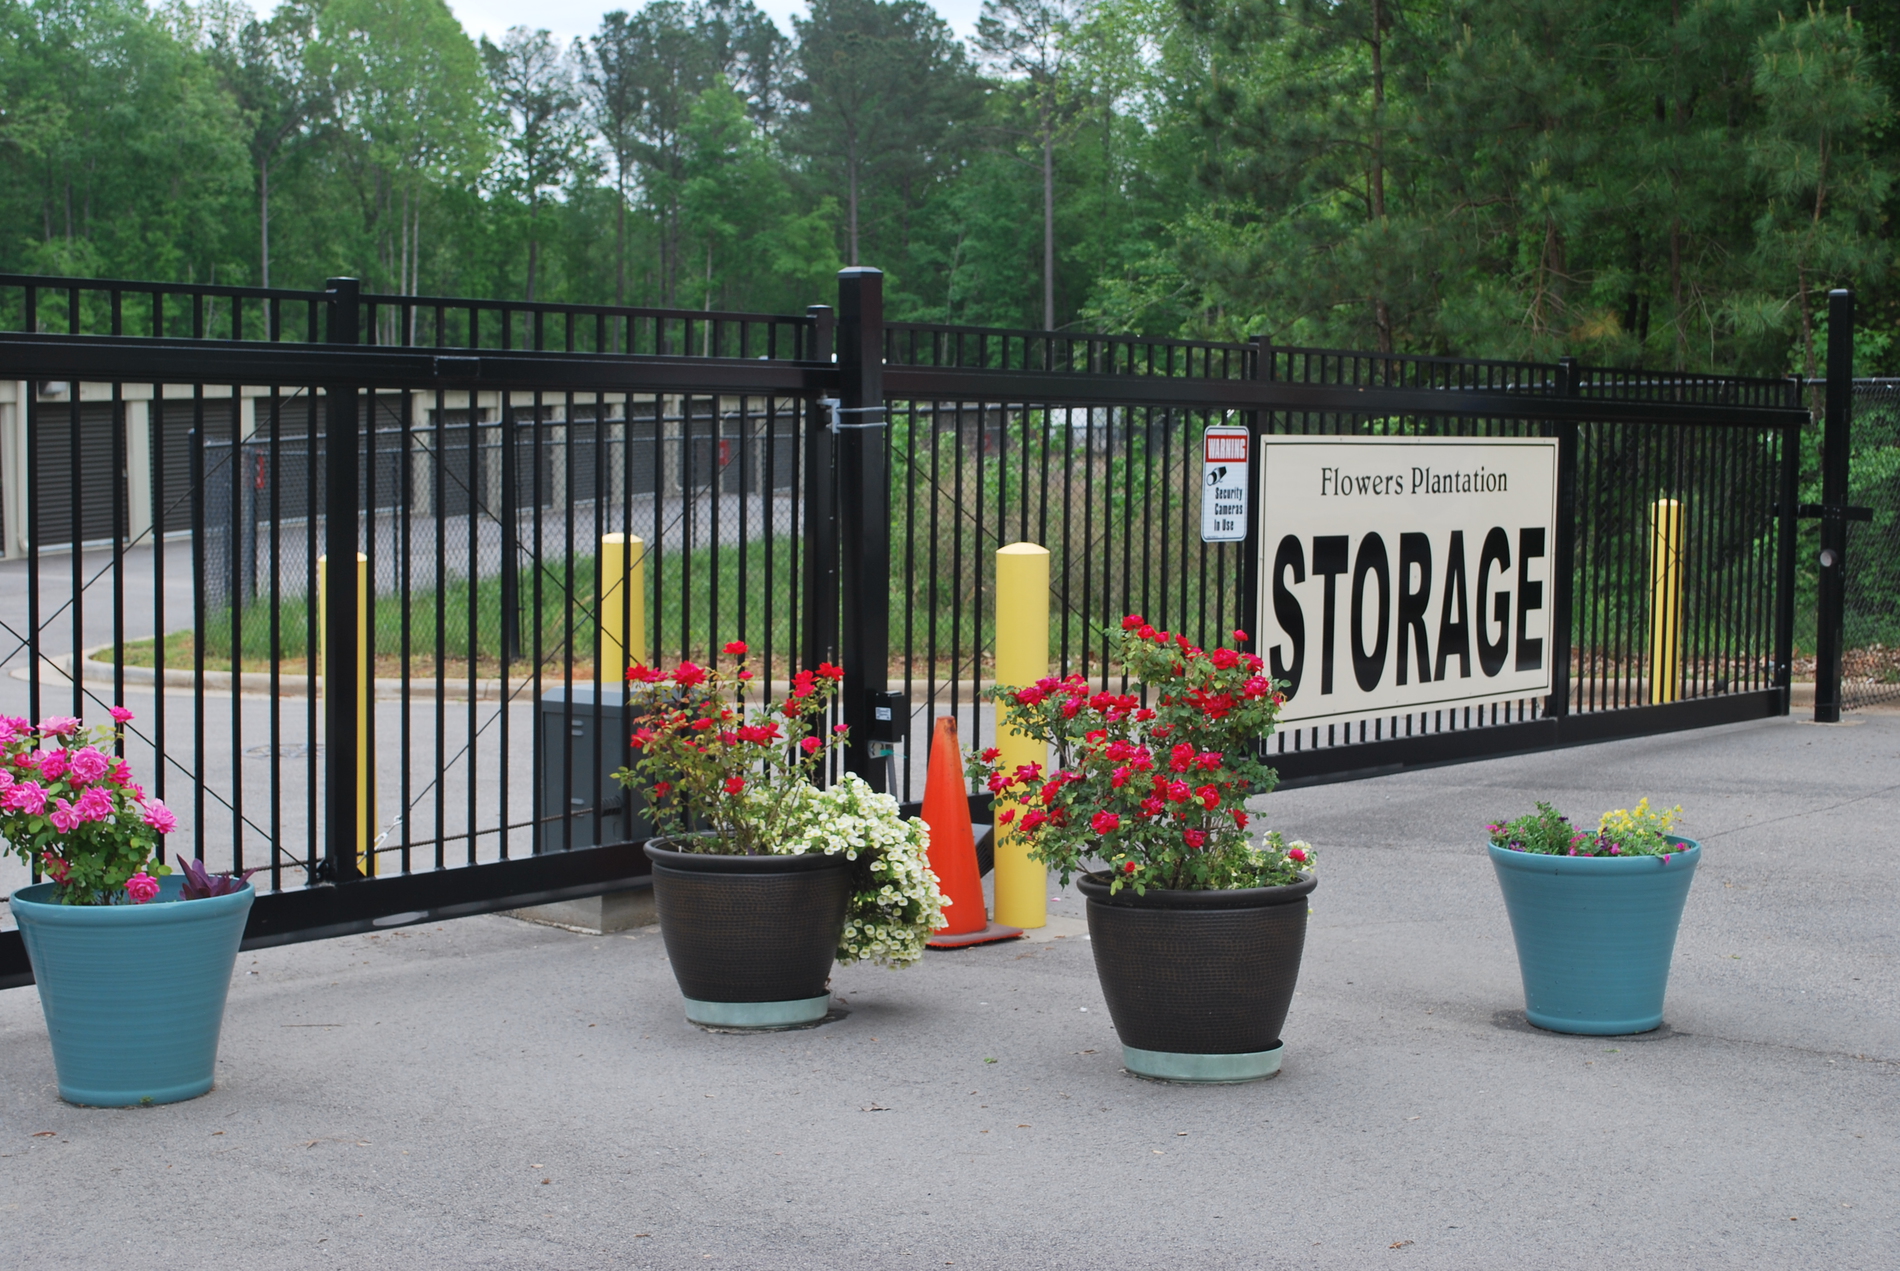 Flowers Plantation Storage  entrance  gate